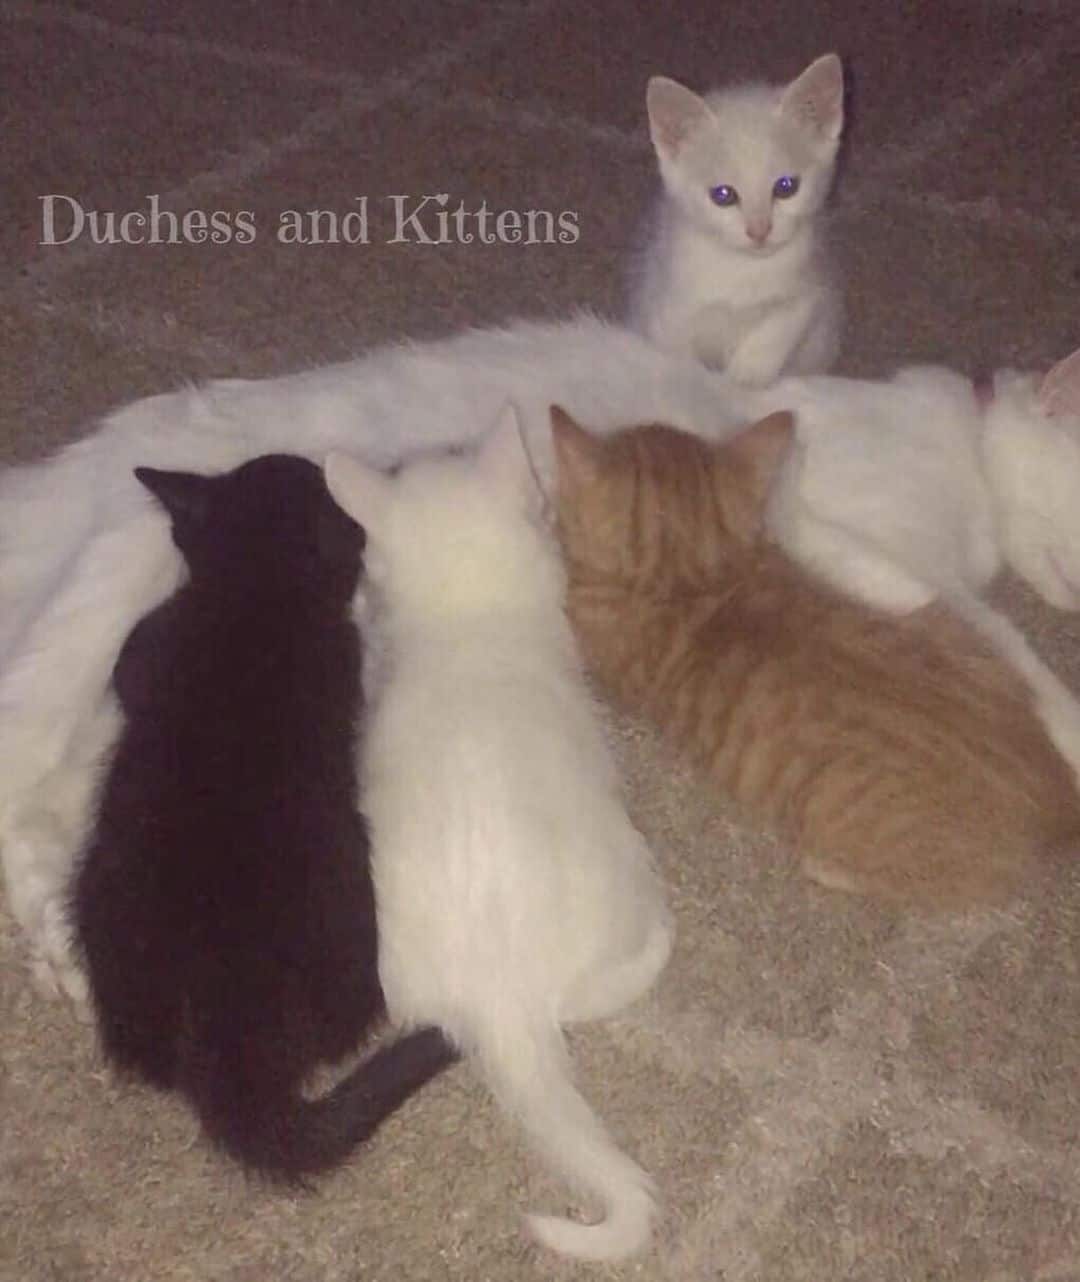 kittens are nursing a big cat